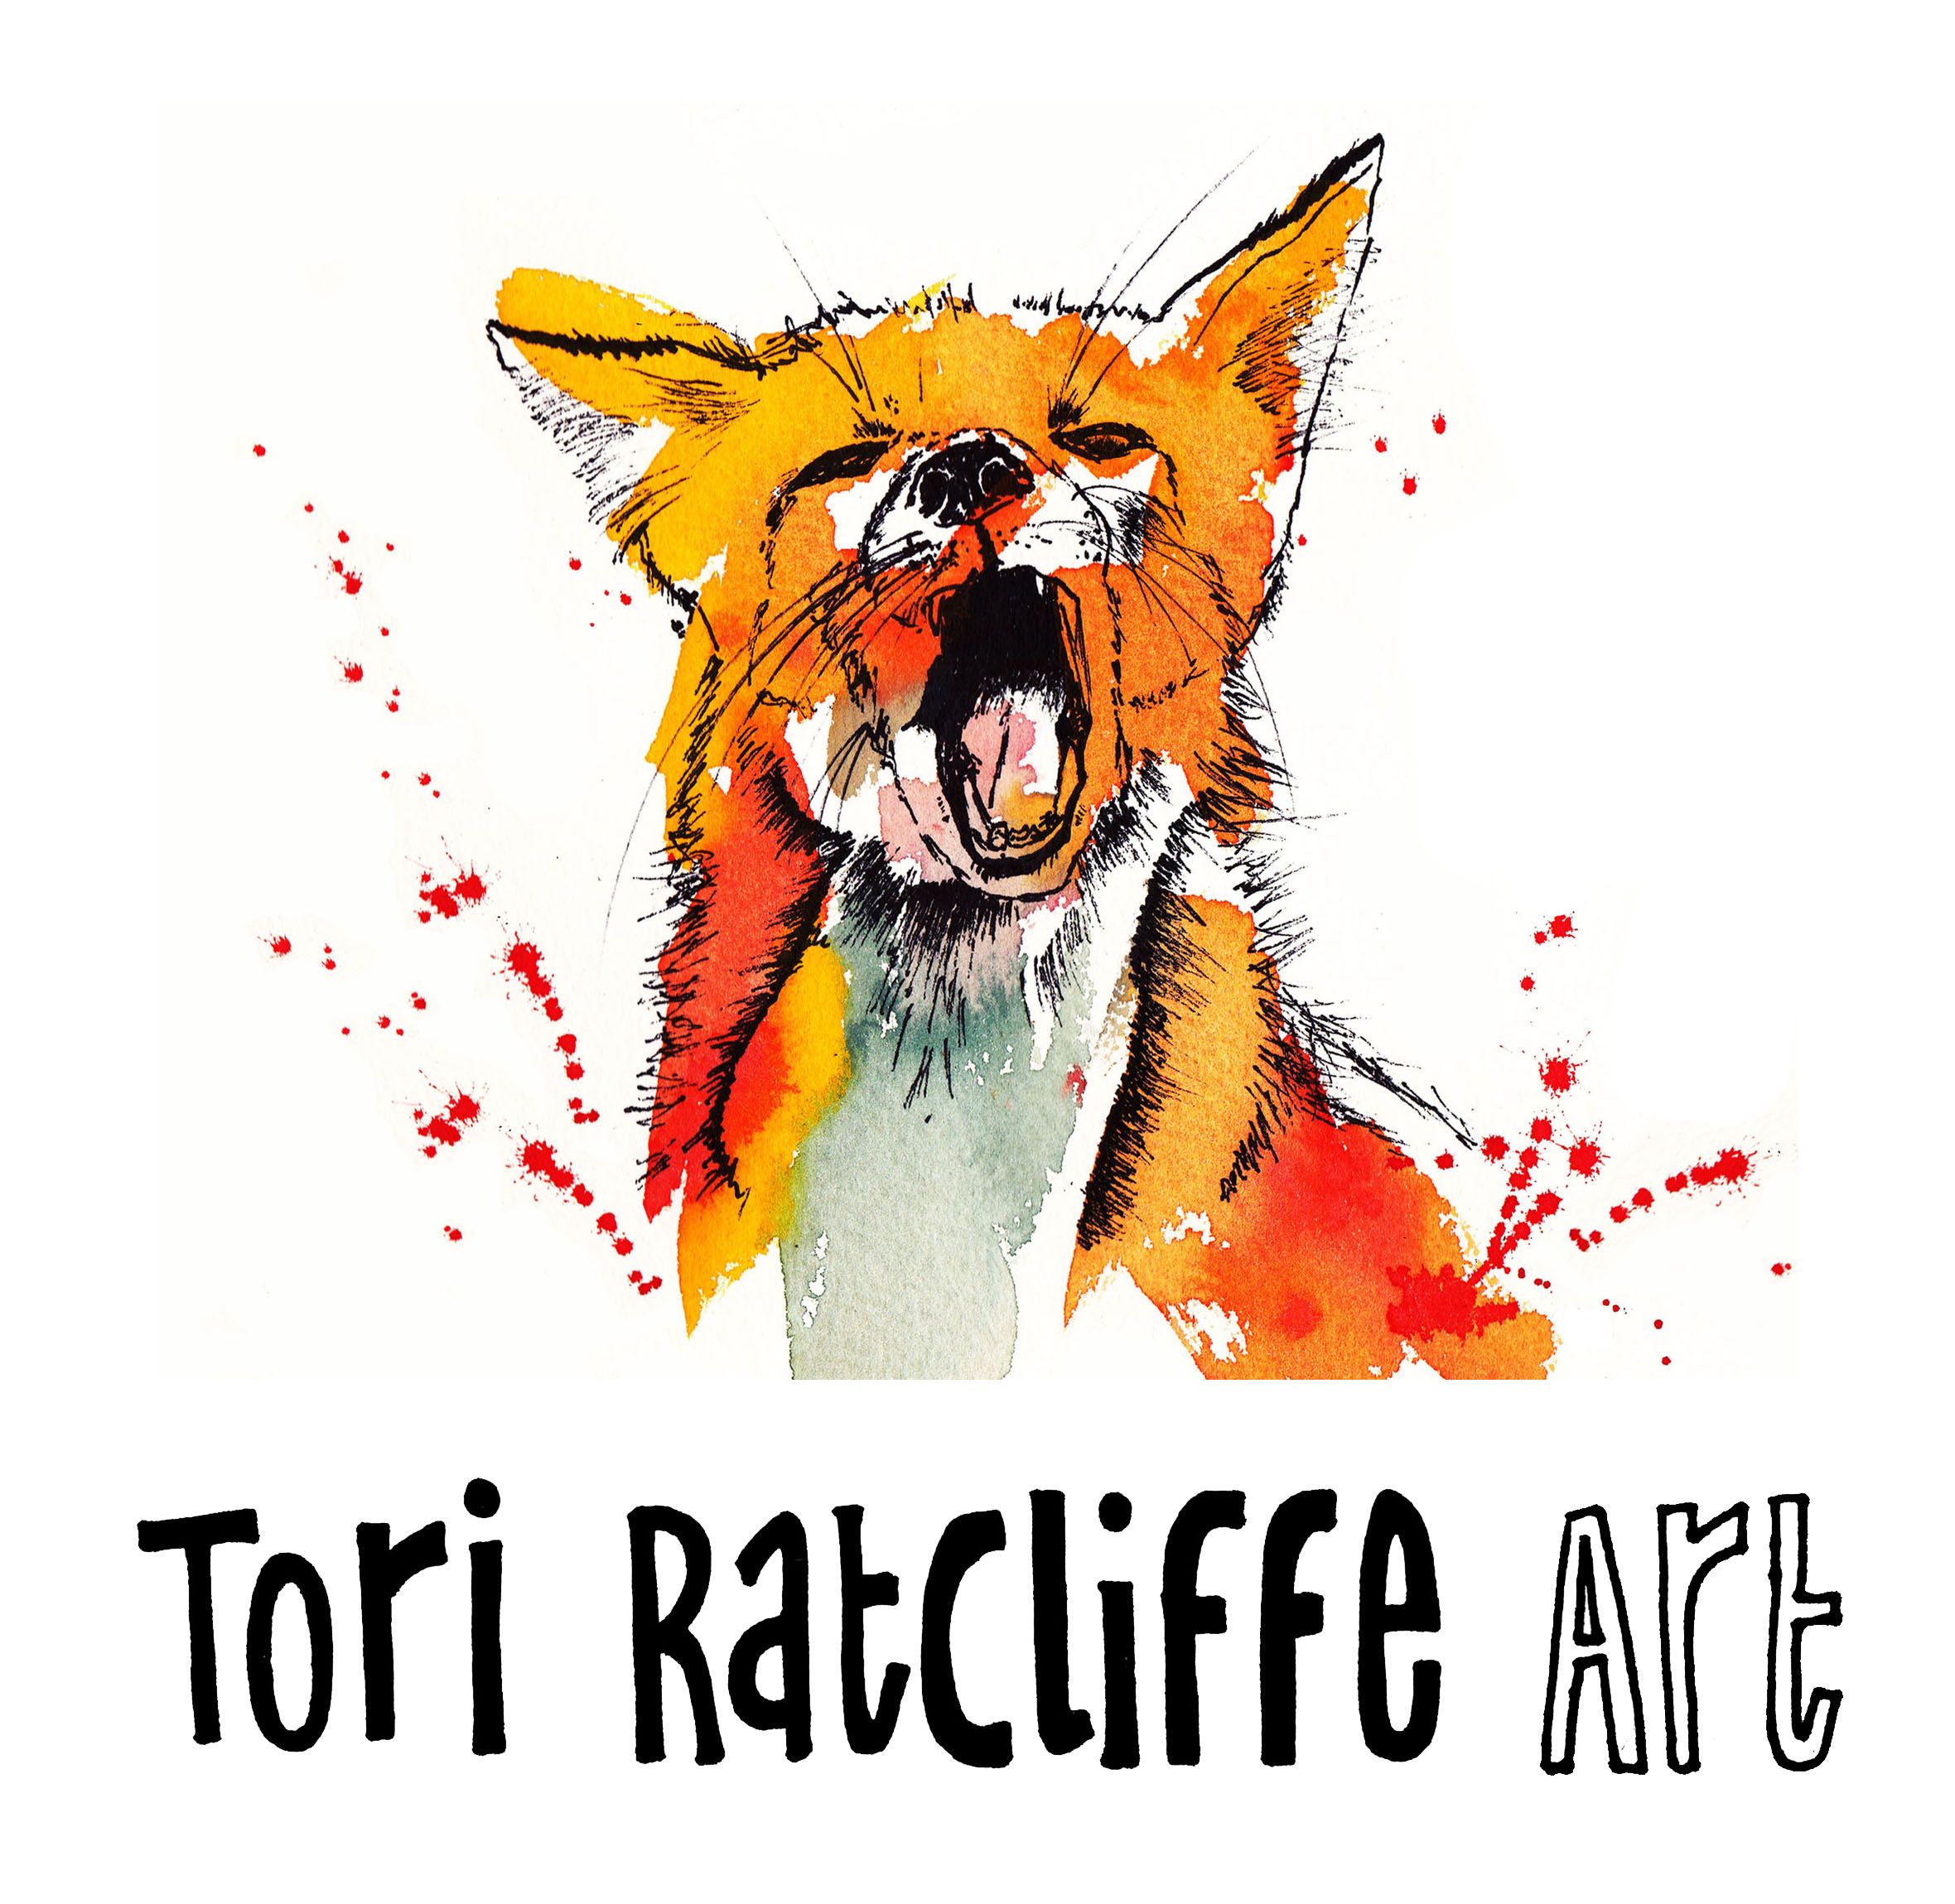 Tori Ratcliffe Art